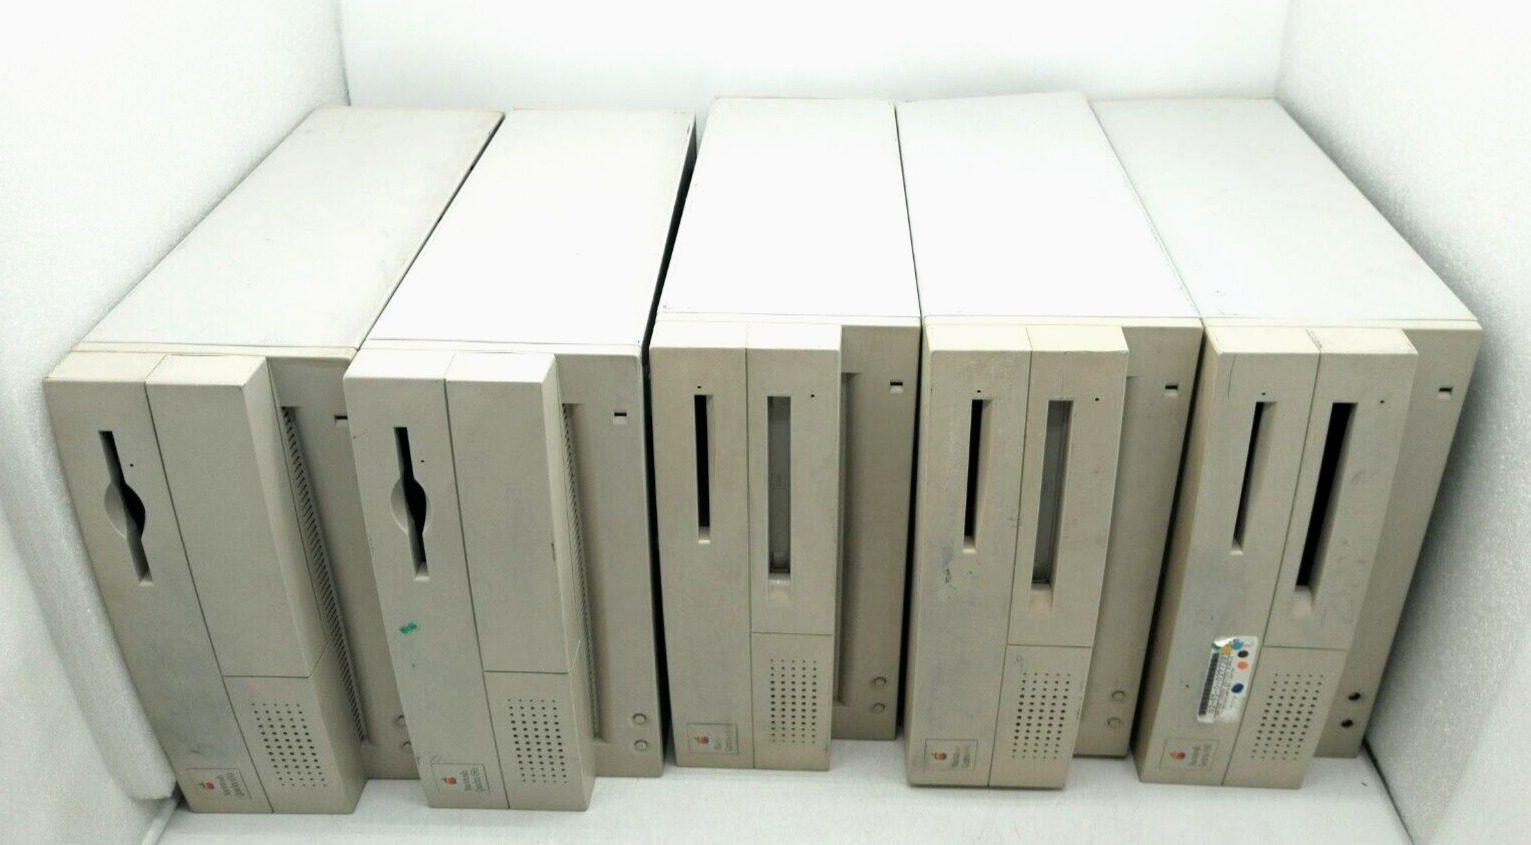 5X APPLE MACINTOSH 650 3X CENTRIS M1205 2X QUADRA M2118 1993 COMPUTERS FOR PARTS